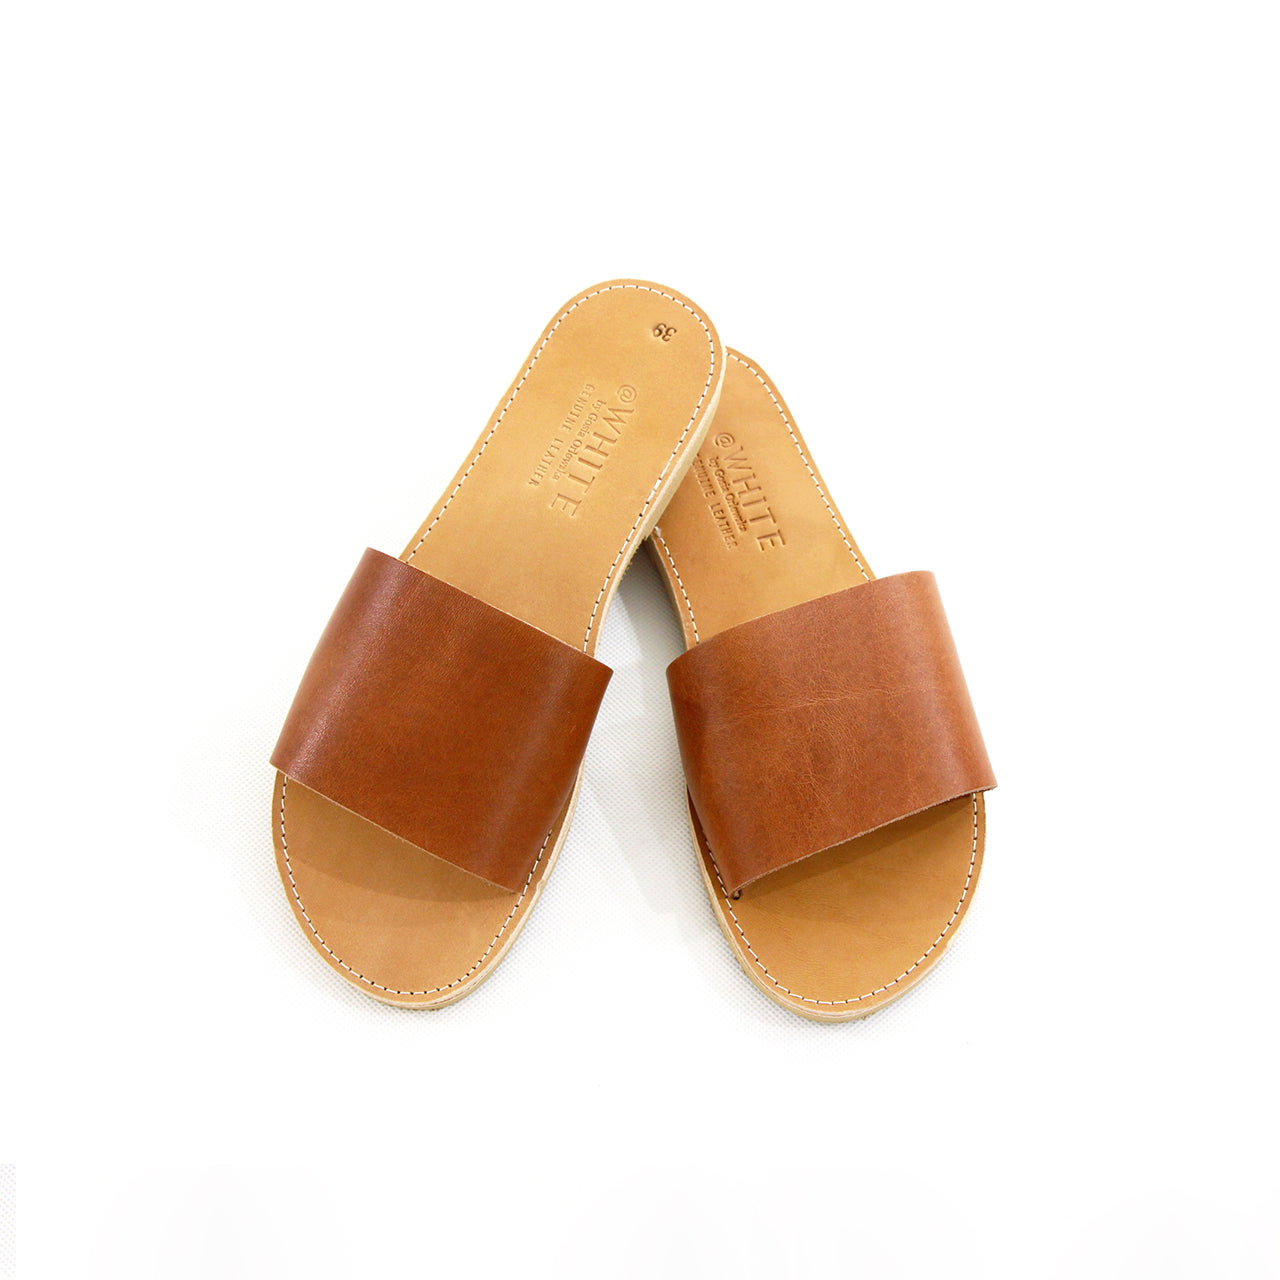 @WHITE / Clio leather sandals - TAN